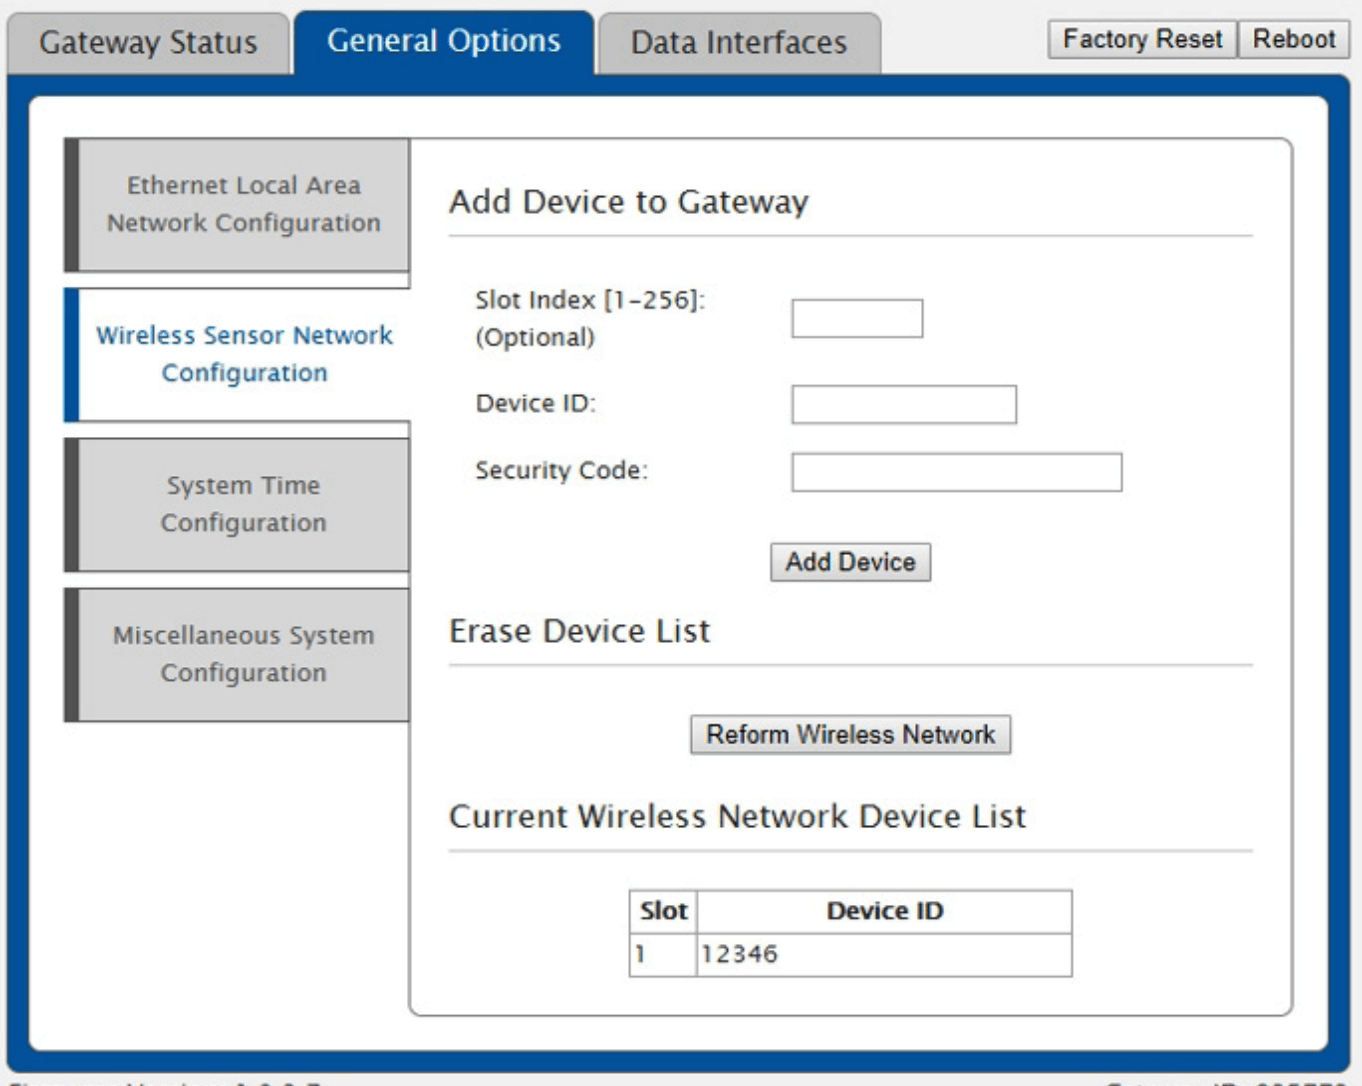 Wireless Sensor Network Configuration